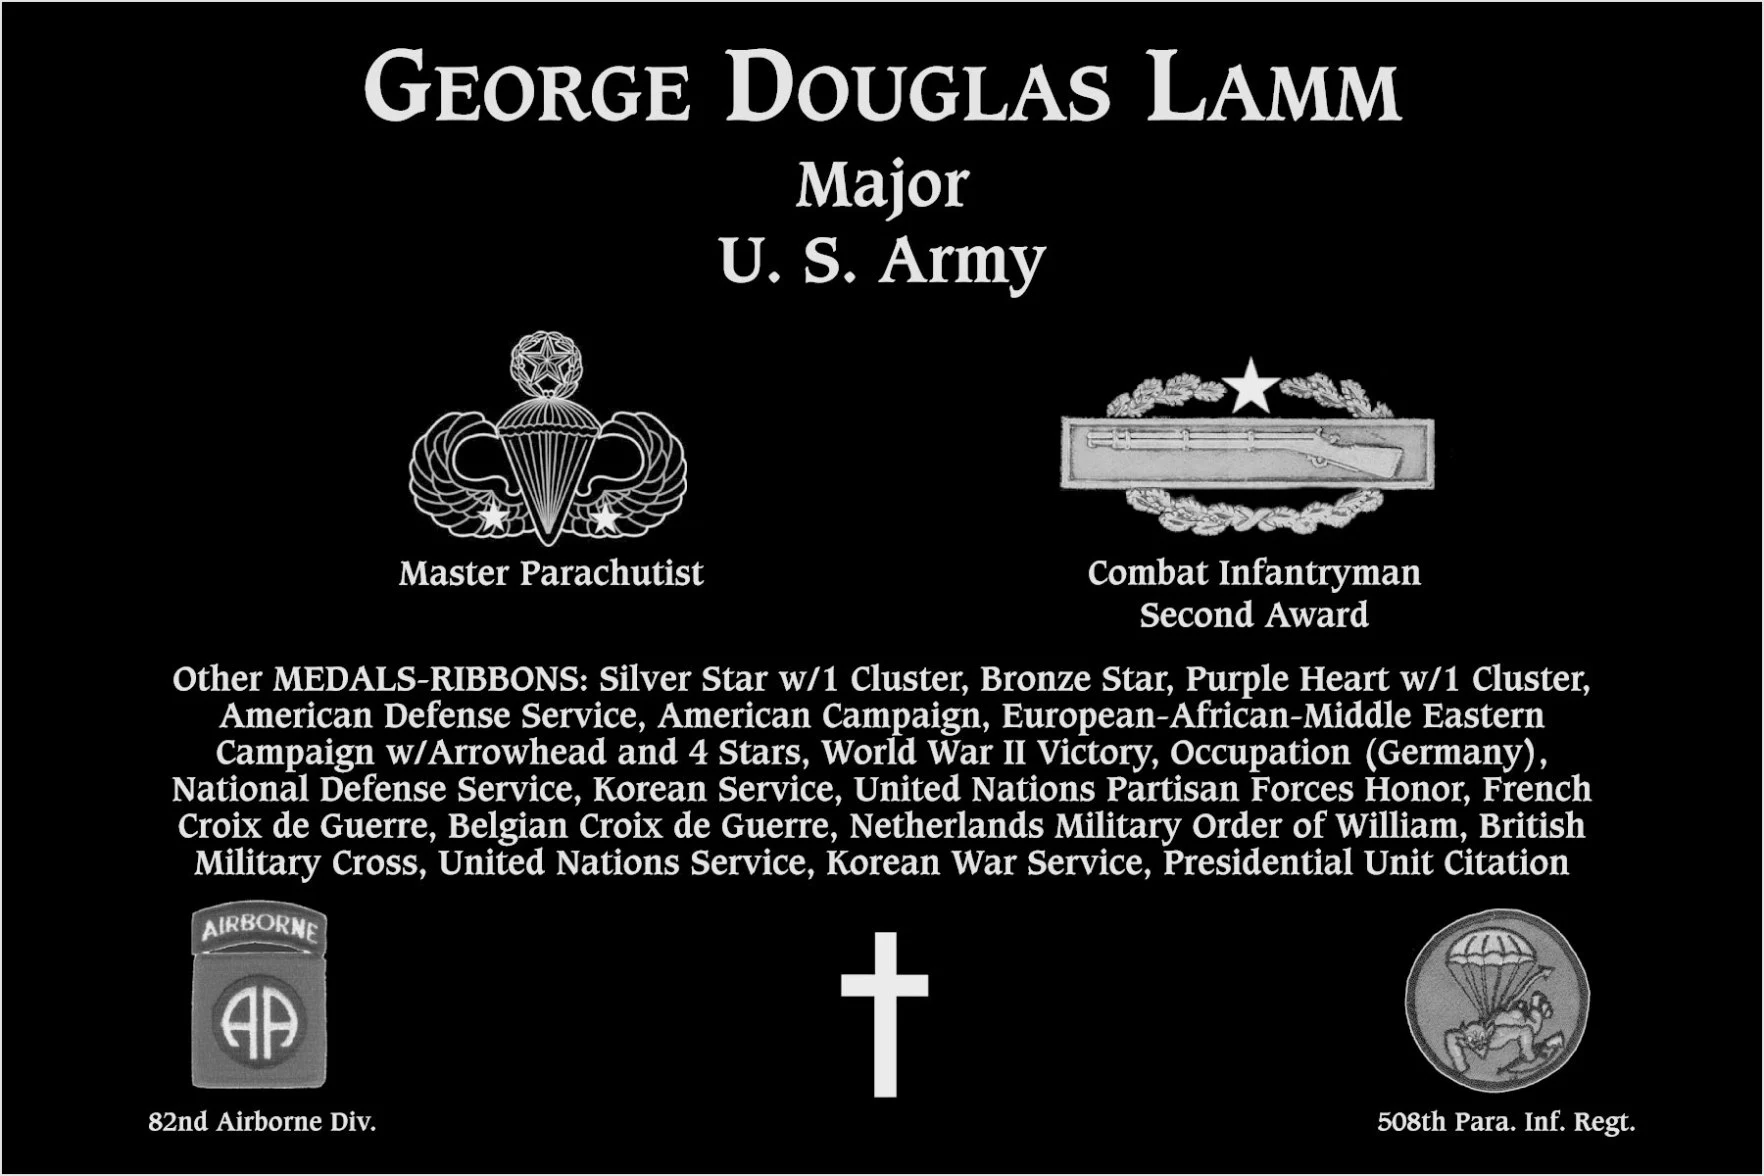 George Douglas Lamm